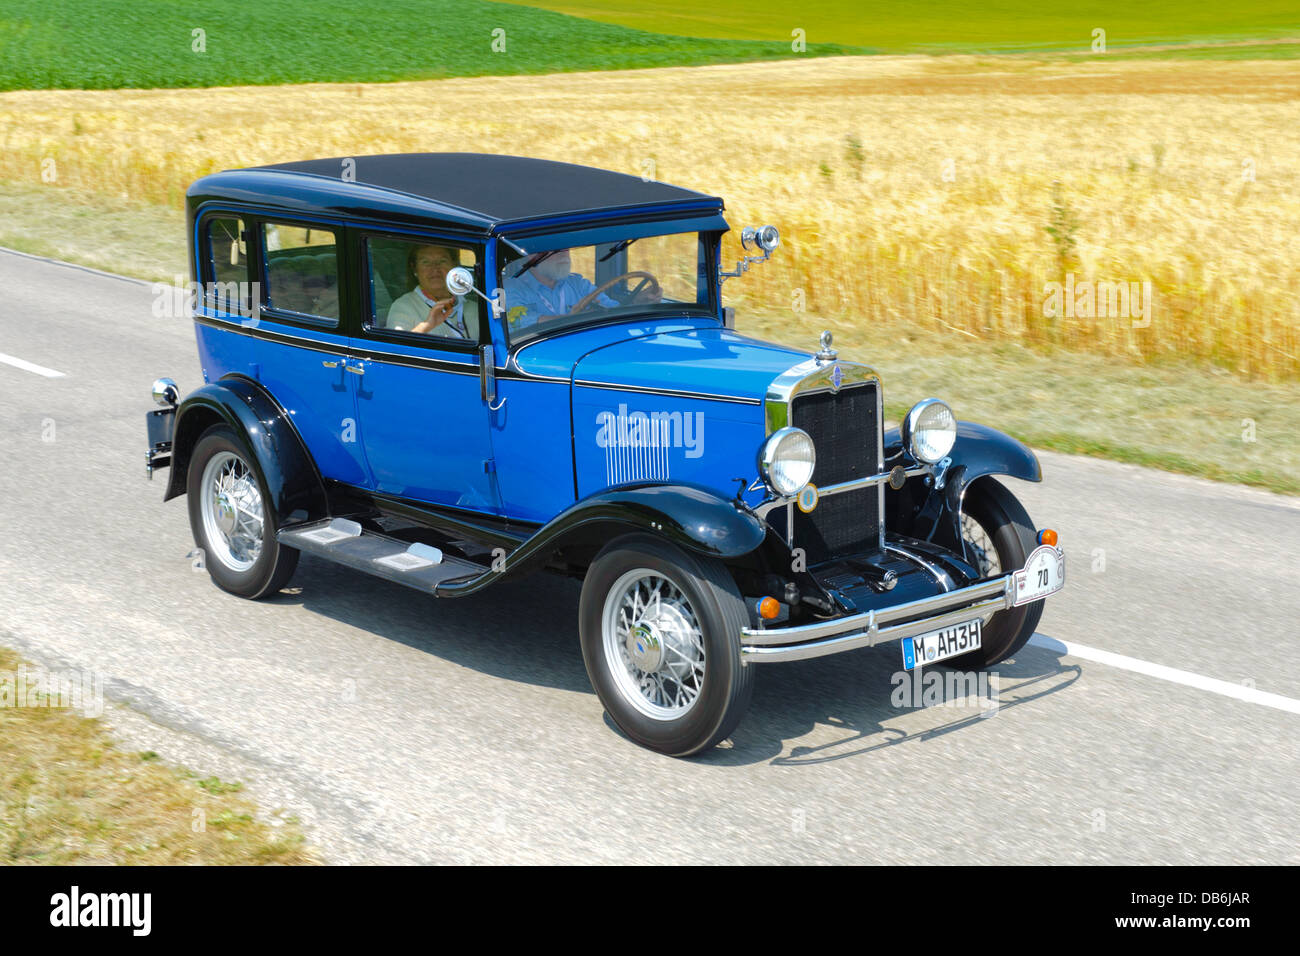 Chevrolet Sedan AD Universal, built at year 1930, photo taken on July 13, 2013 in Landsberg, Germany Stock Photo